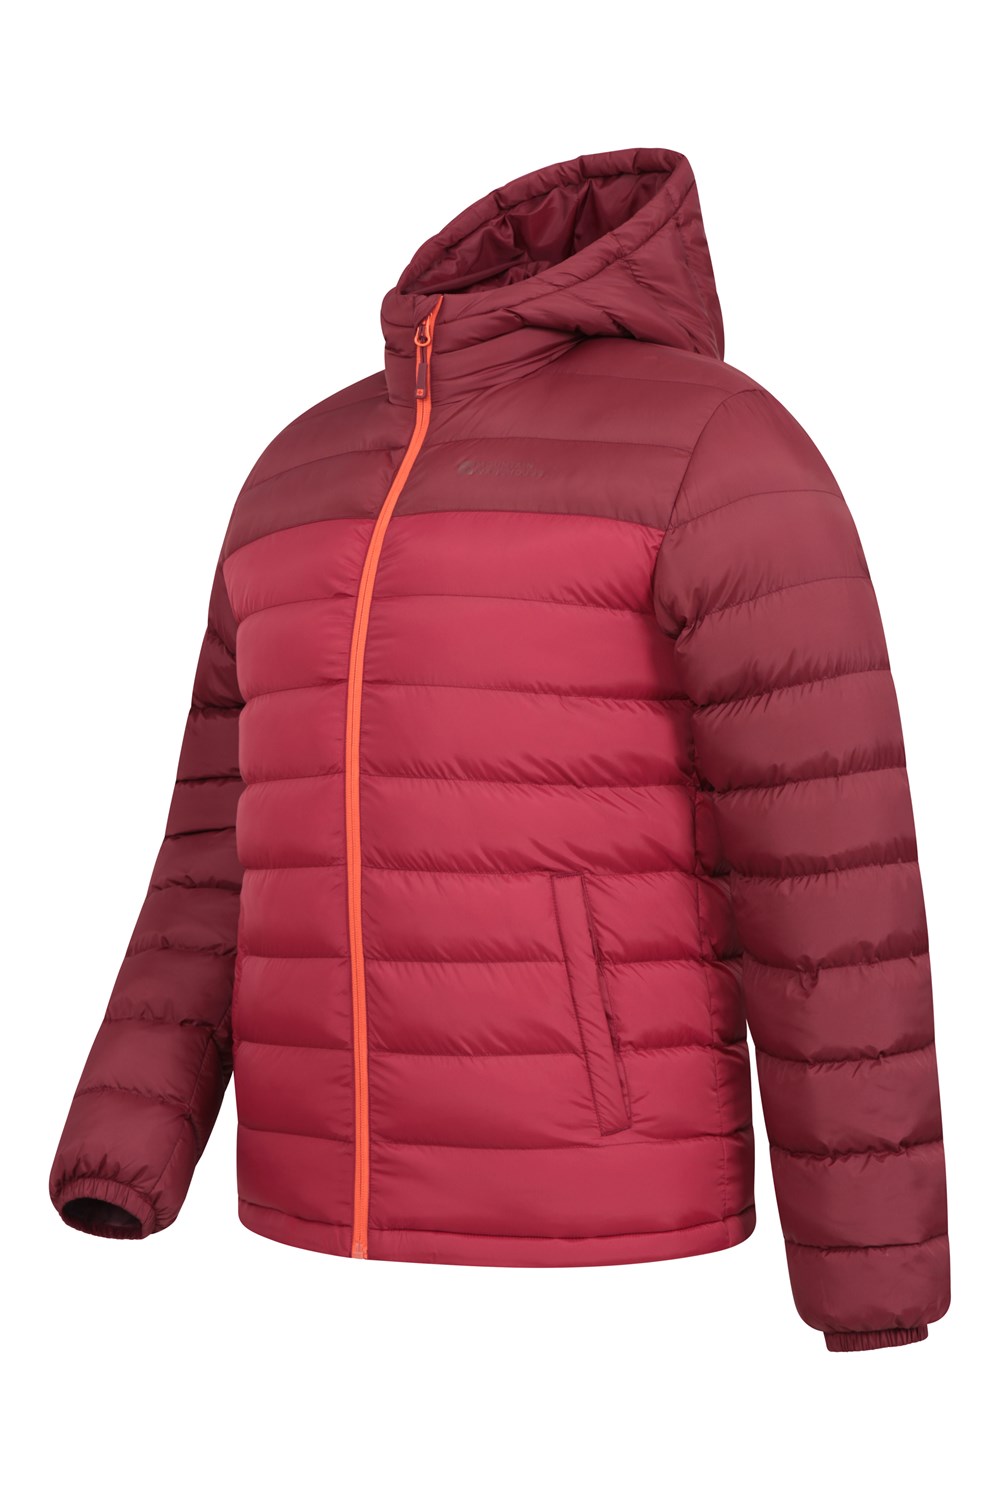 miniature 41 - Mountain Warehouse Mens Seasons Padded Jacket Puffer Water Resistant Winter Coat